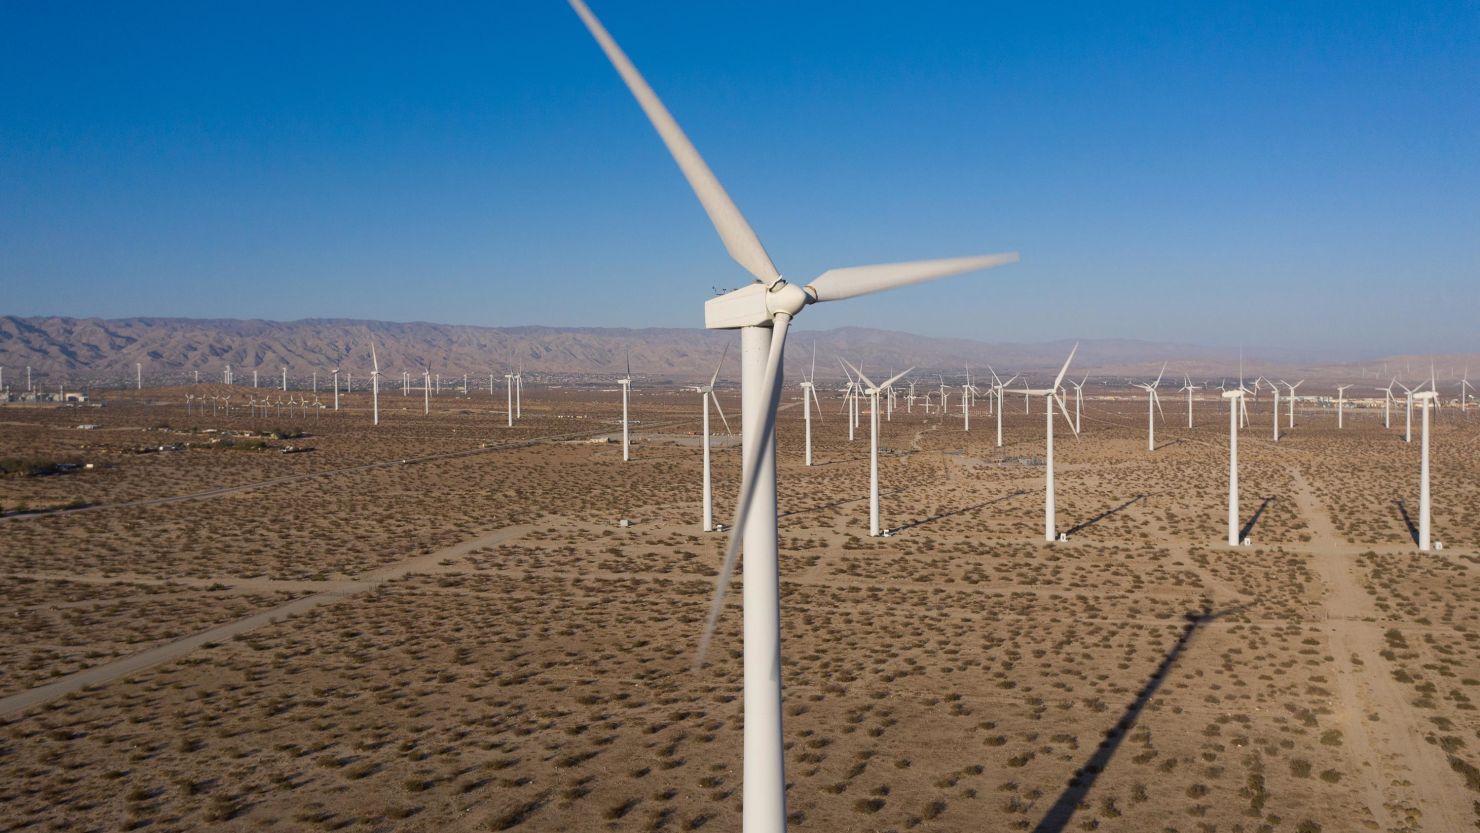 Turbines at the San Gorgonio Pass wind farm in Whitewater, California.